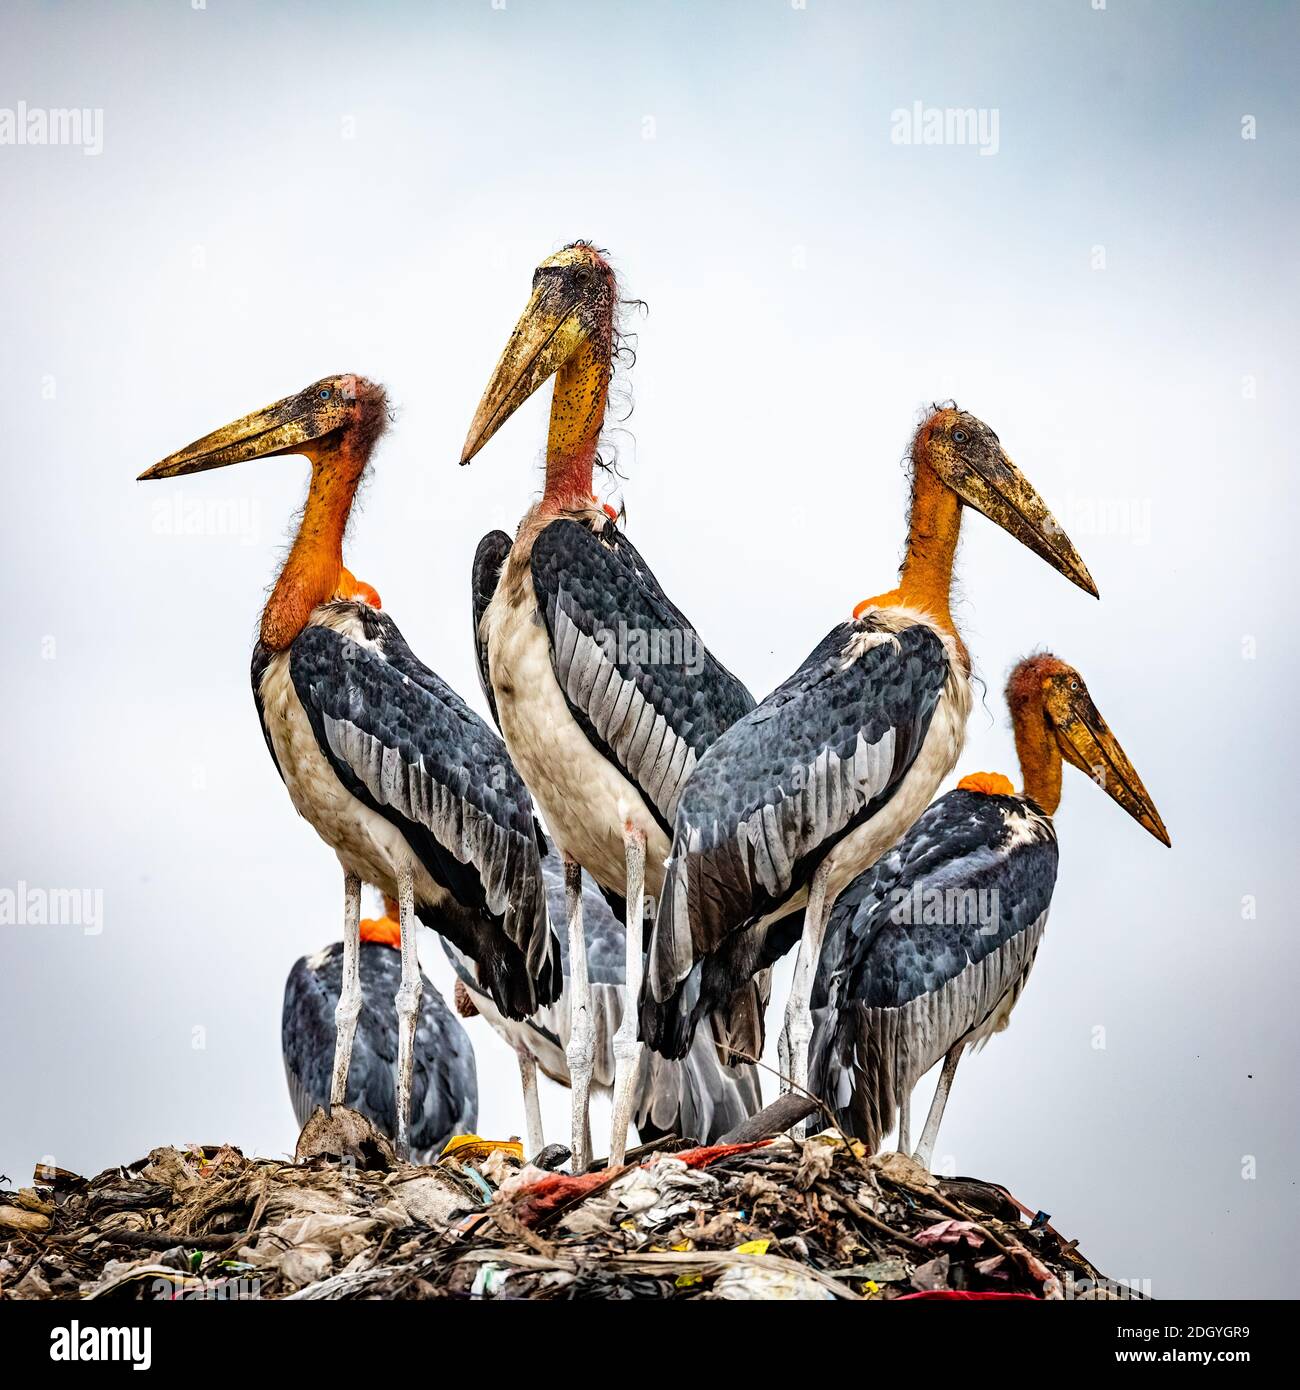 Four greater adjutant storks in Assam, India Stock Photo